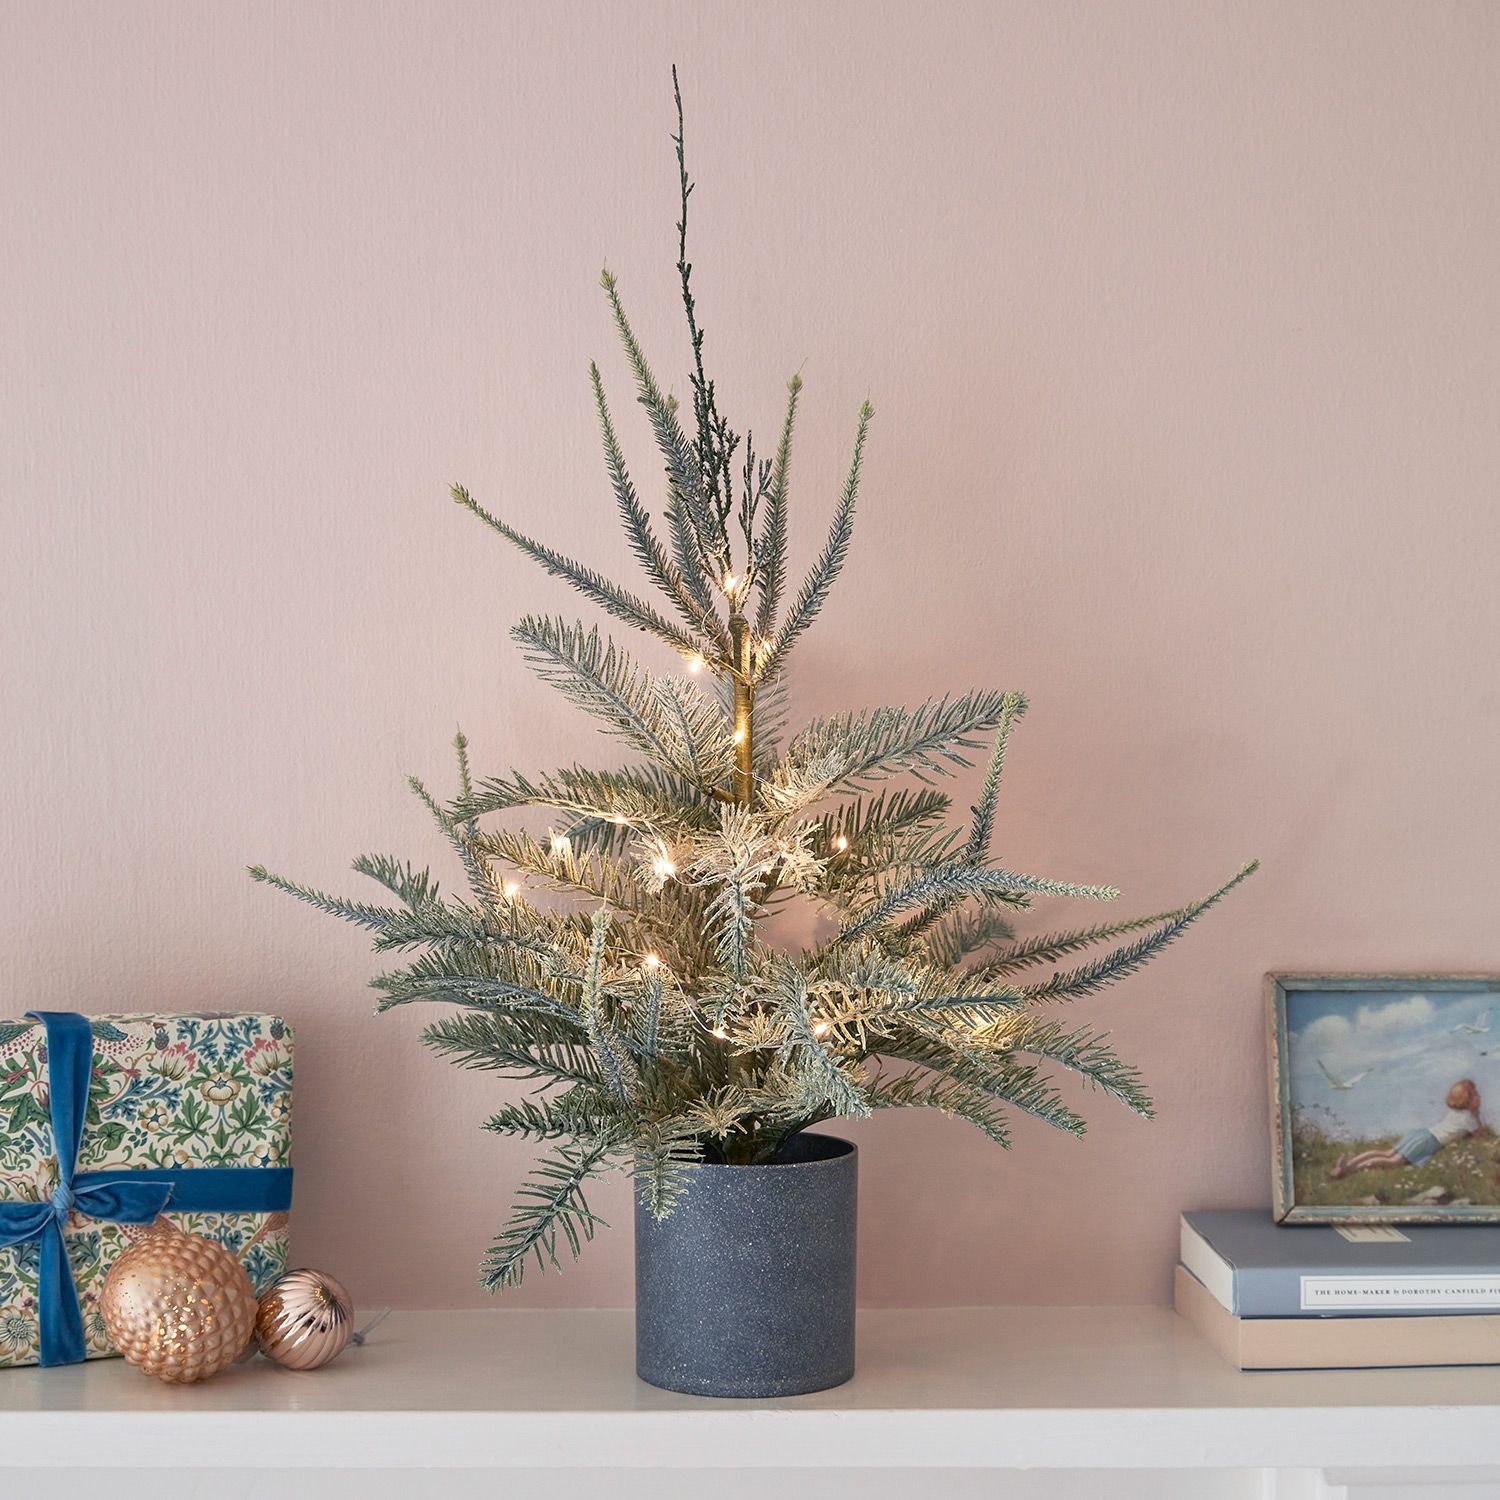 Thiết kế small decoration christmas tree cho mùa Giáng Sinh lung linh